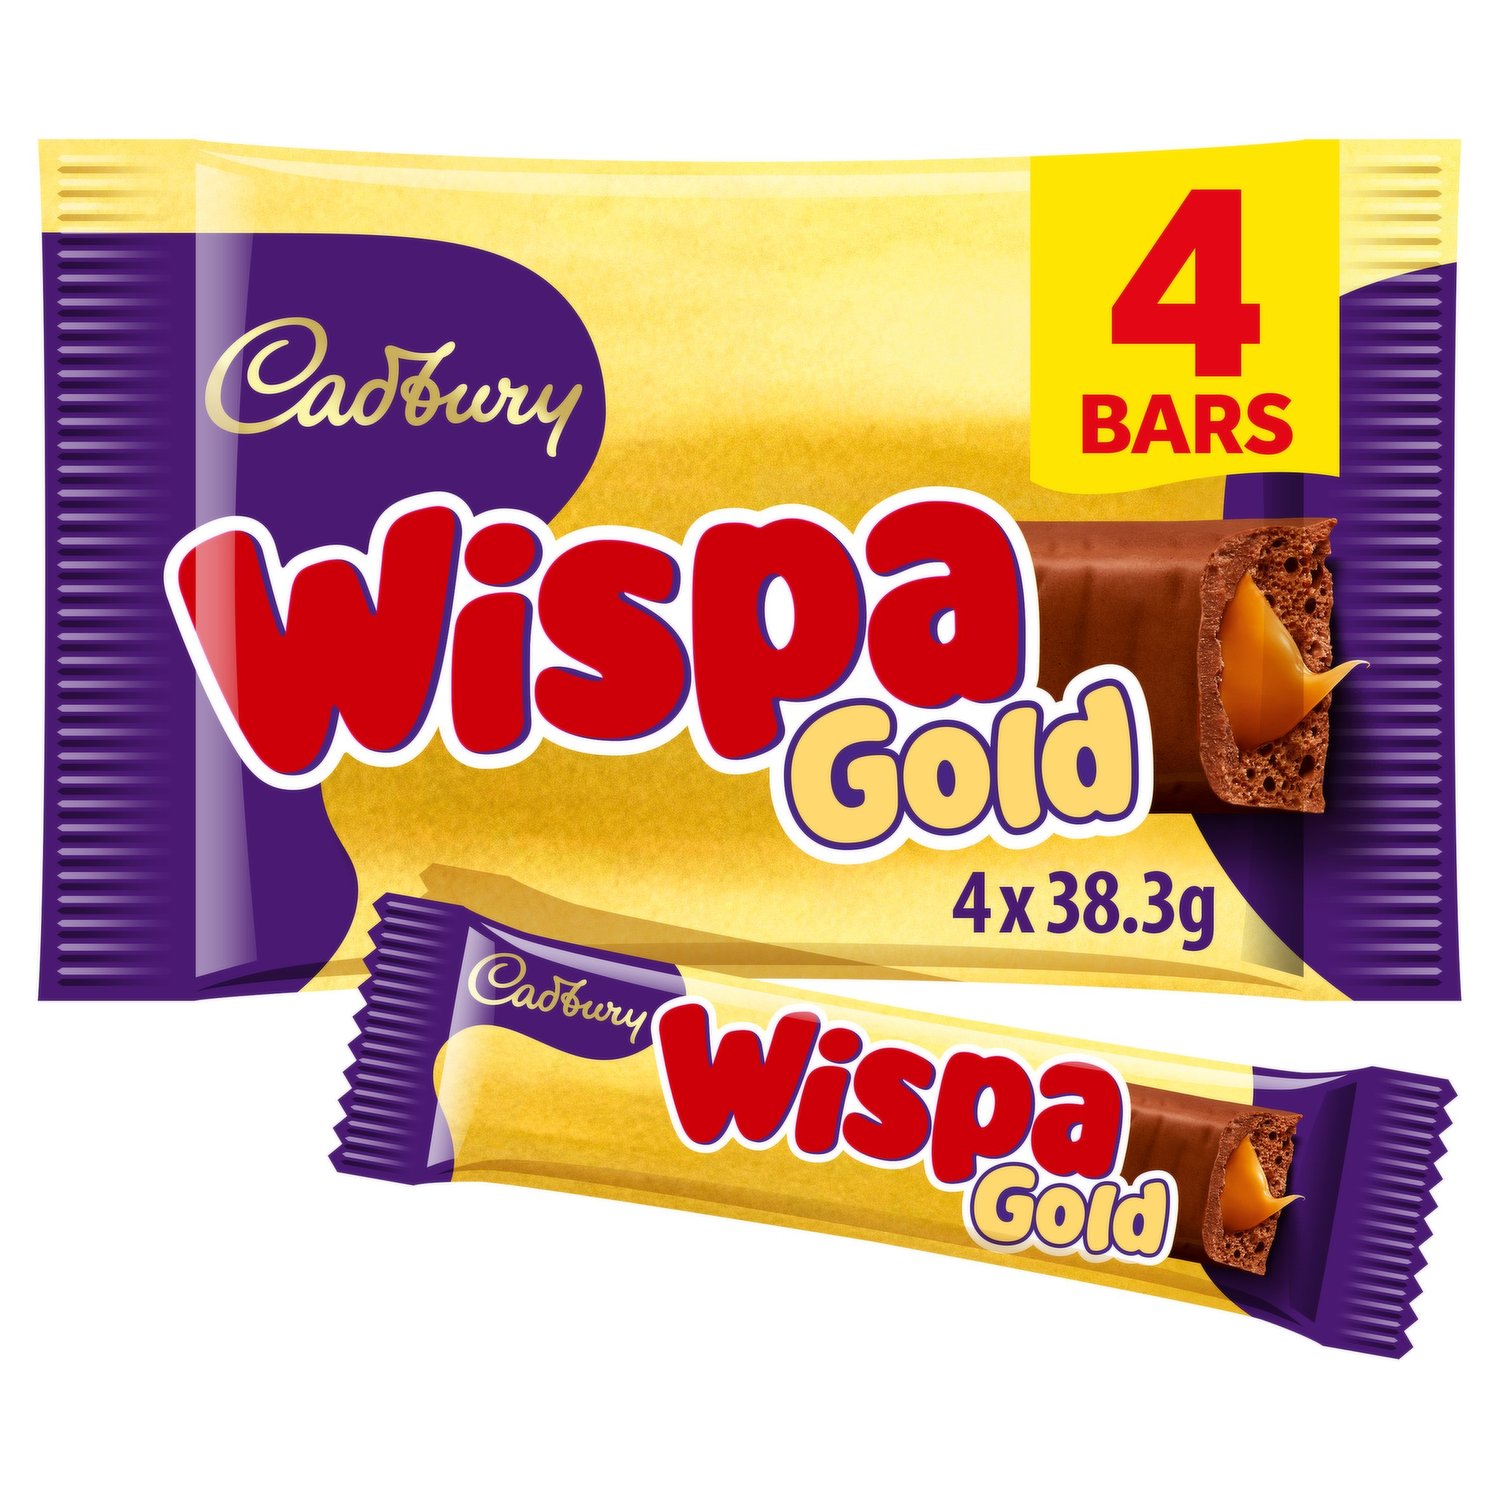 How to make Chocolate Ice Cream Rolls out of Cadbury Wispa Gold - Chocolate  Bars